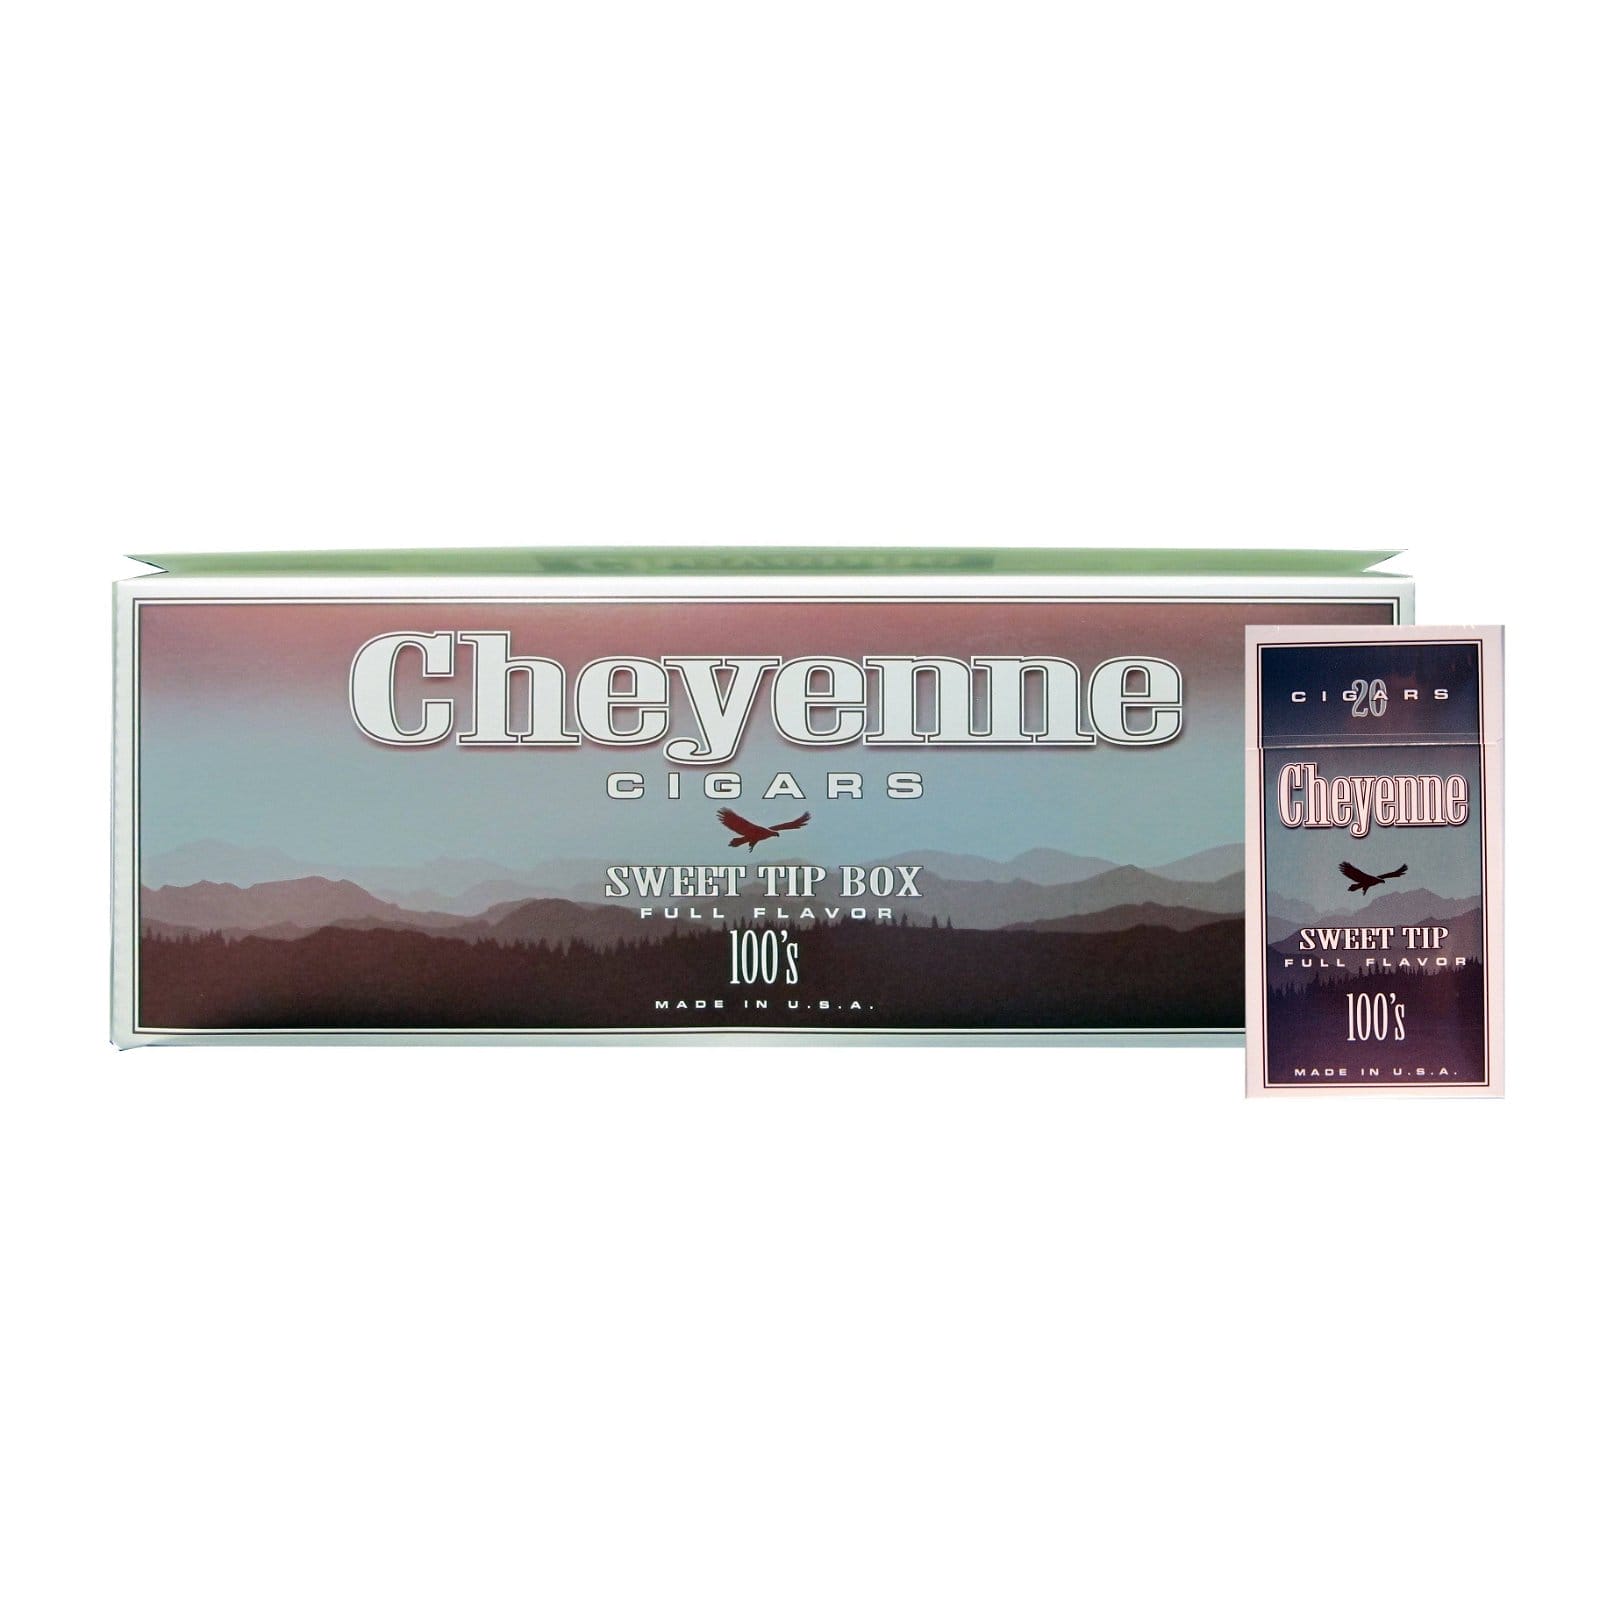 Cheyenne Sweet Tip Little Cigars